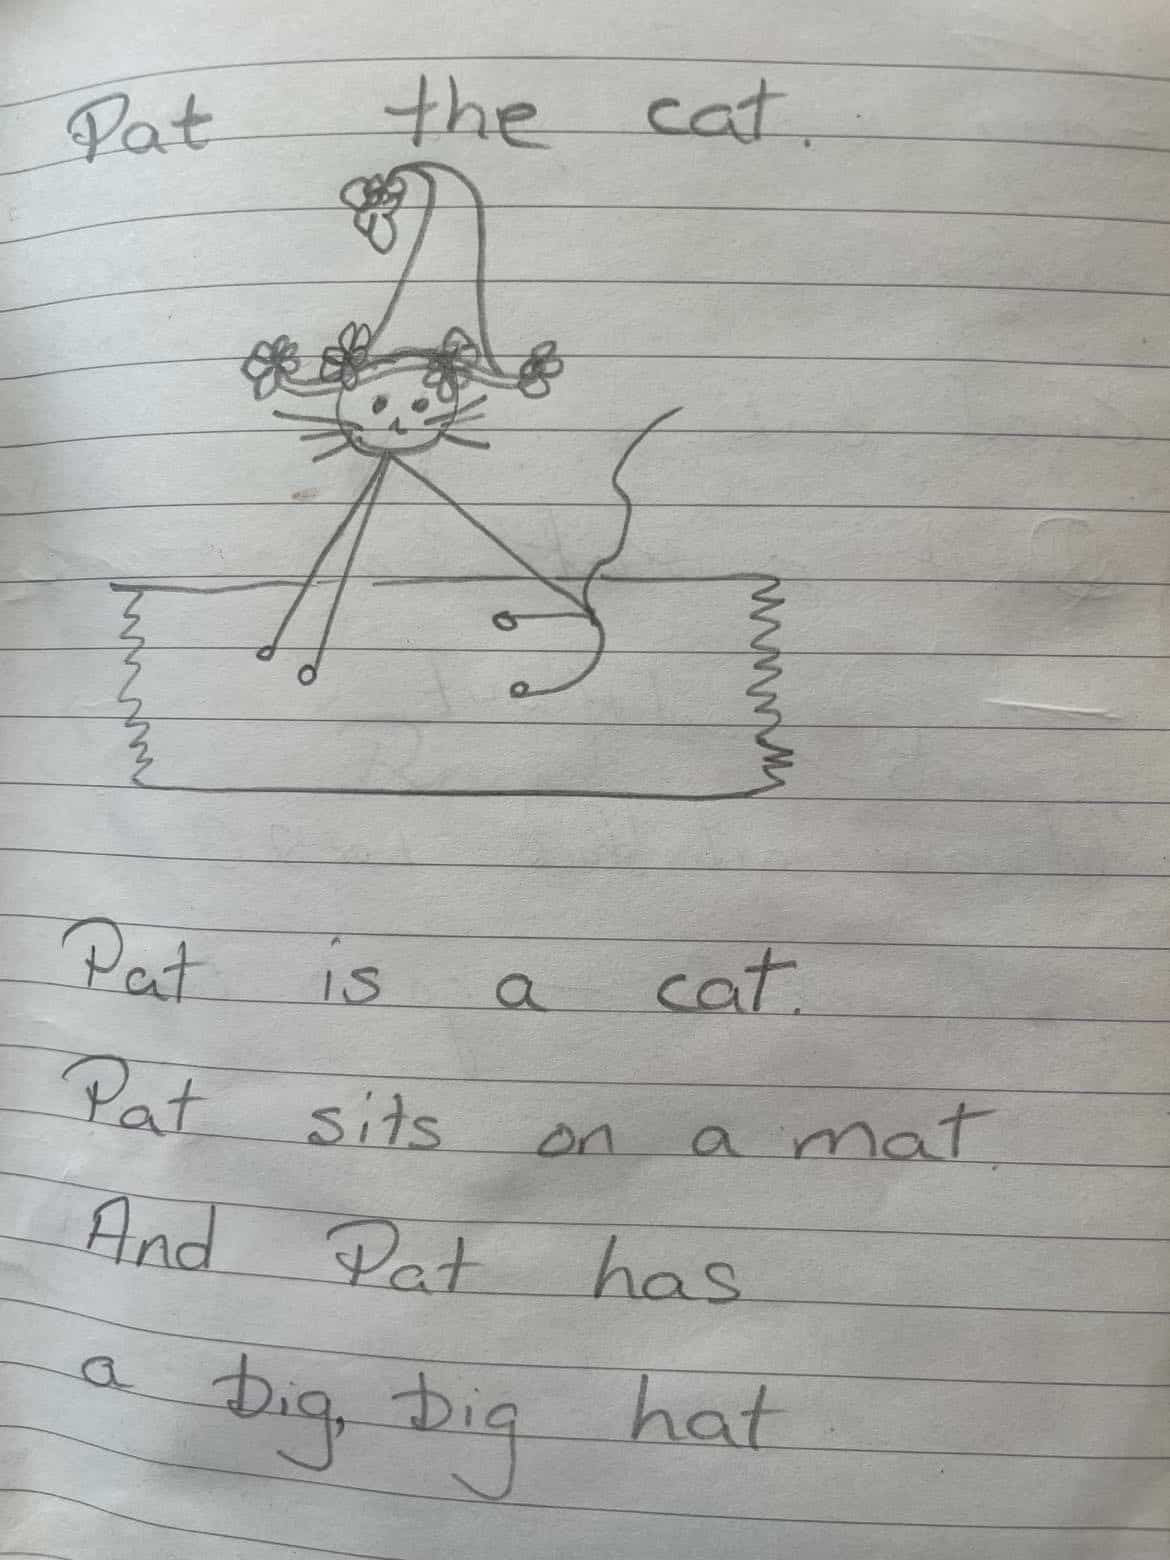 Stick figure cat sitting on a mat. TextPat the cat. Pat is a cat. Pat sits on a mat.And Pat has a big, big hat